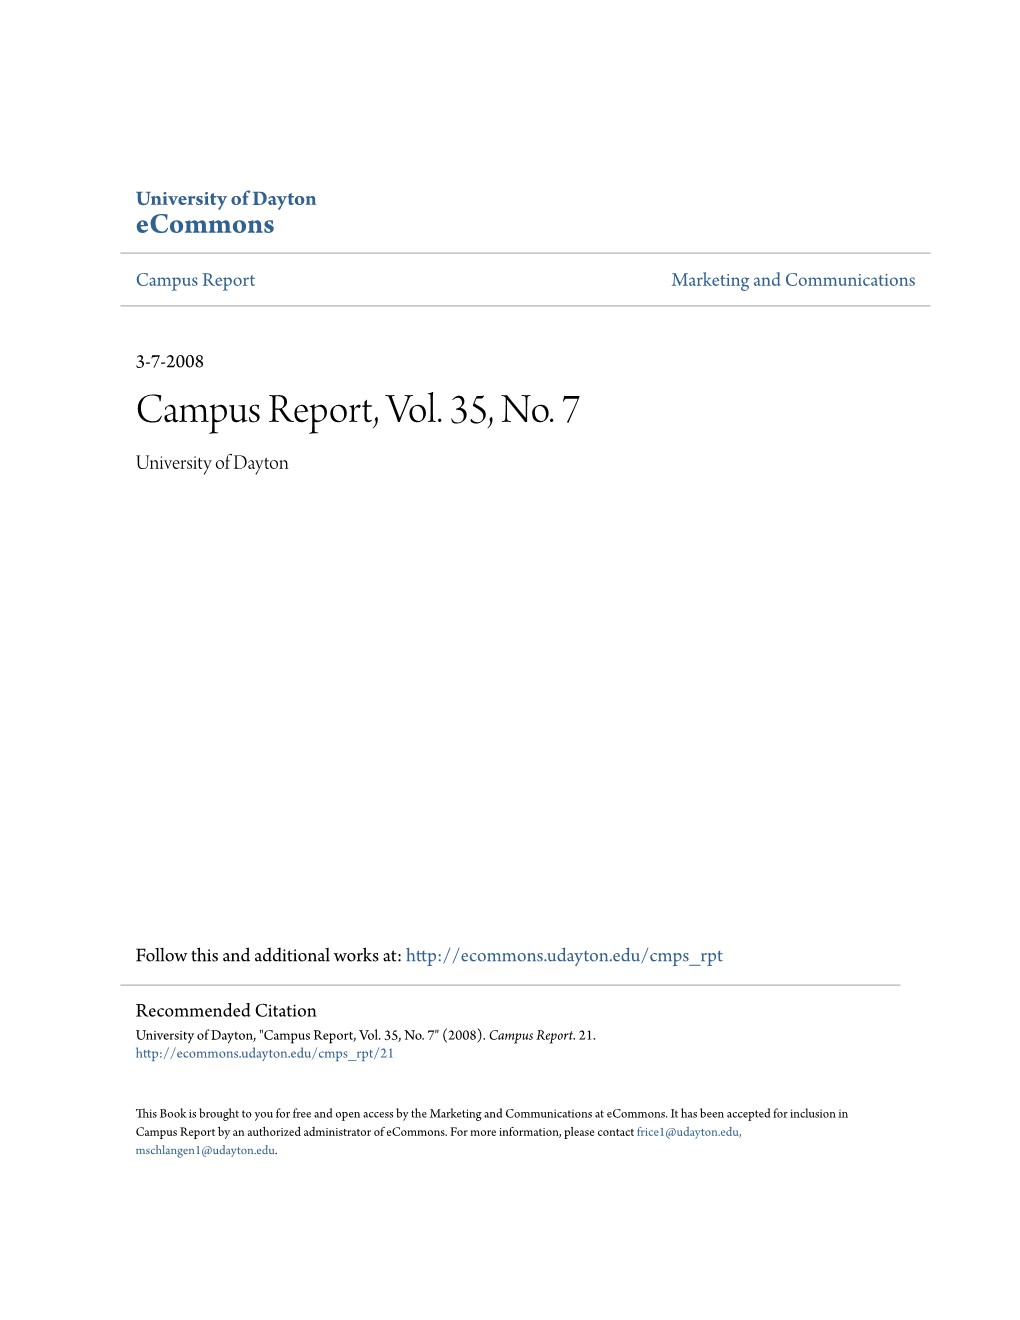 Campus Report, Vol. 35, No. 7 University of Dayton